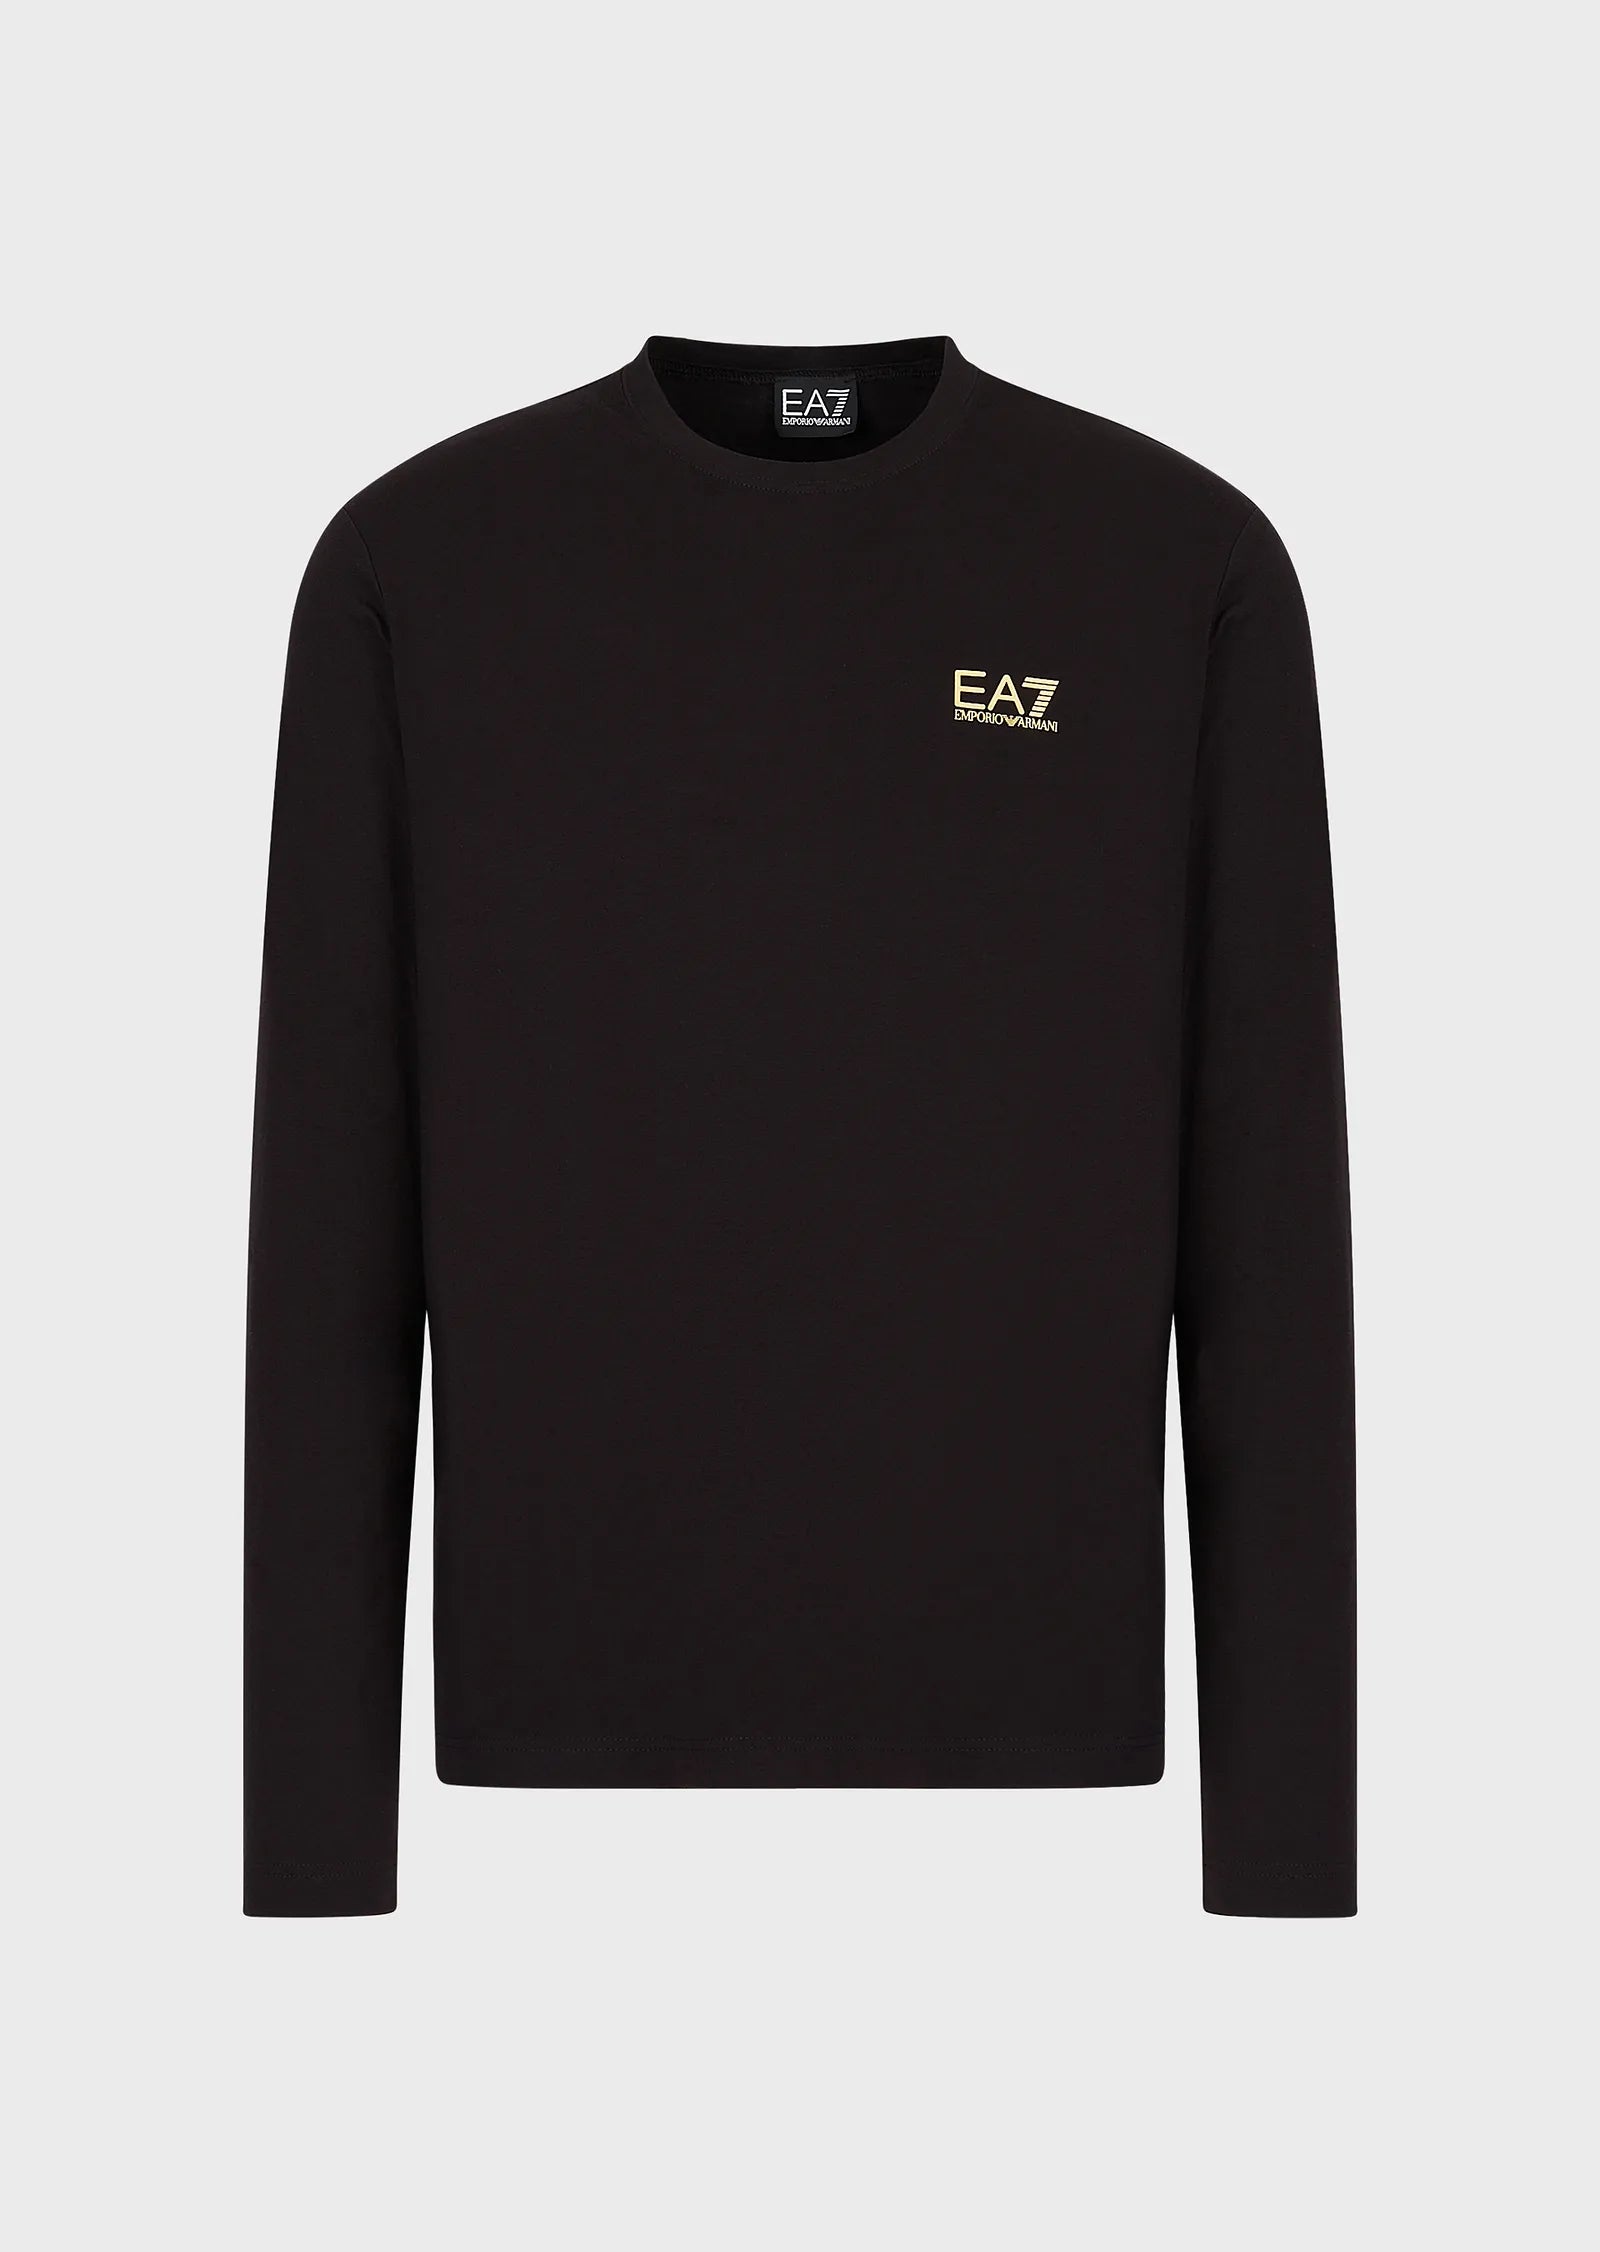 camiseta ea7 negra